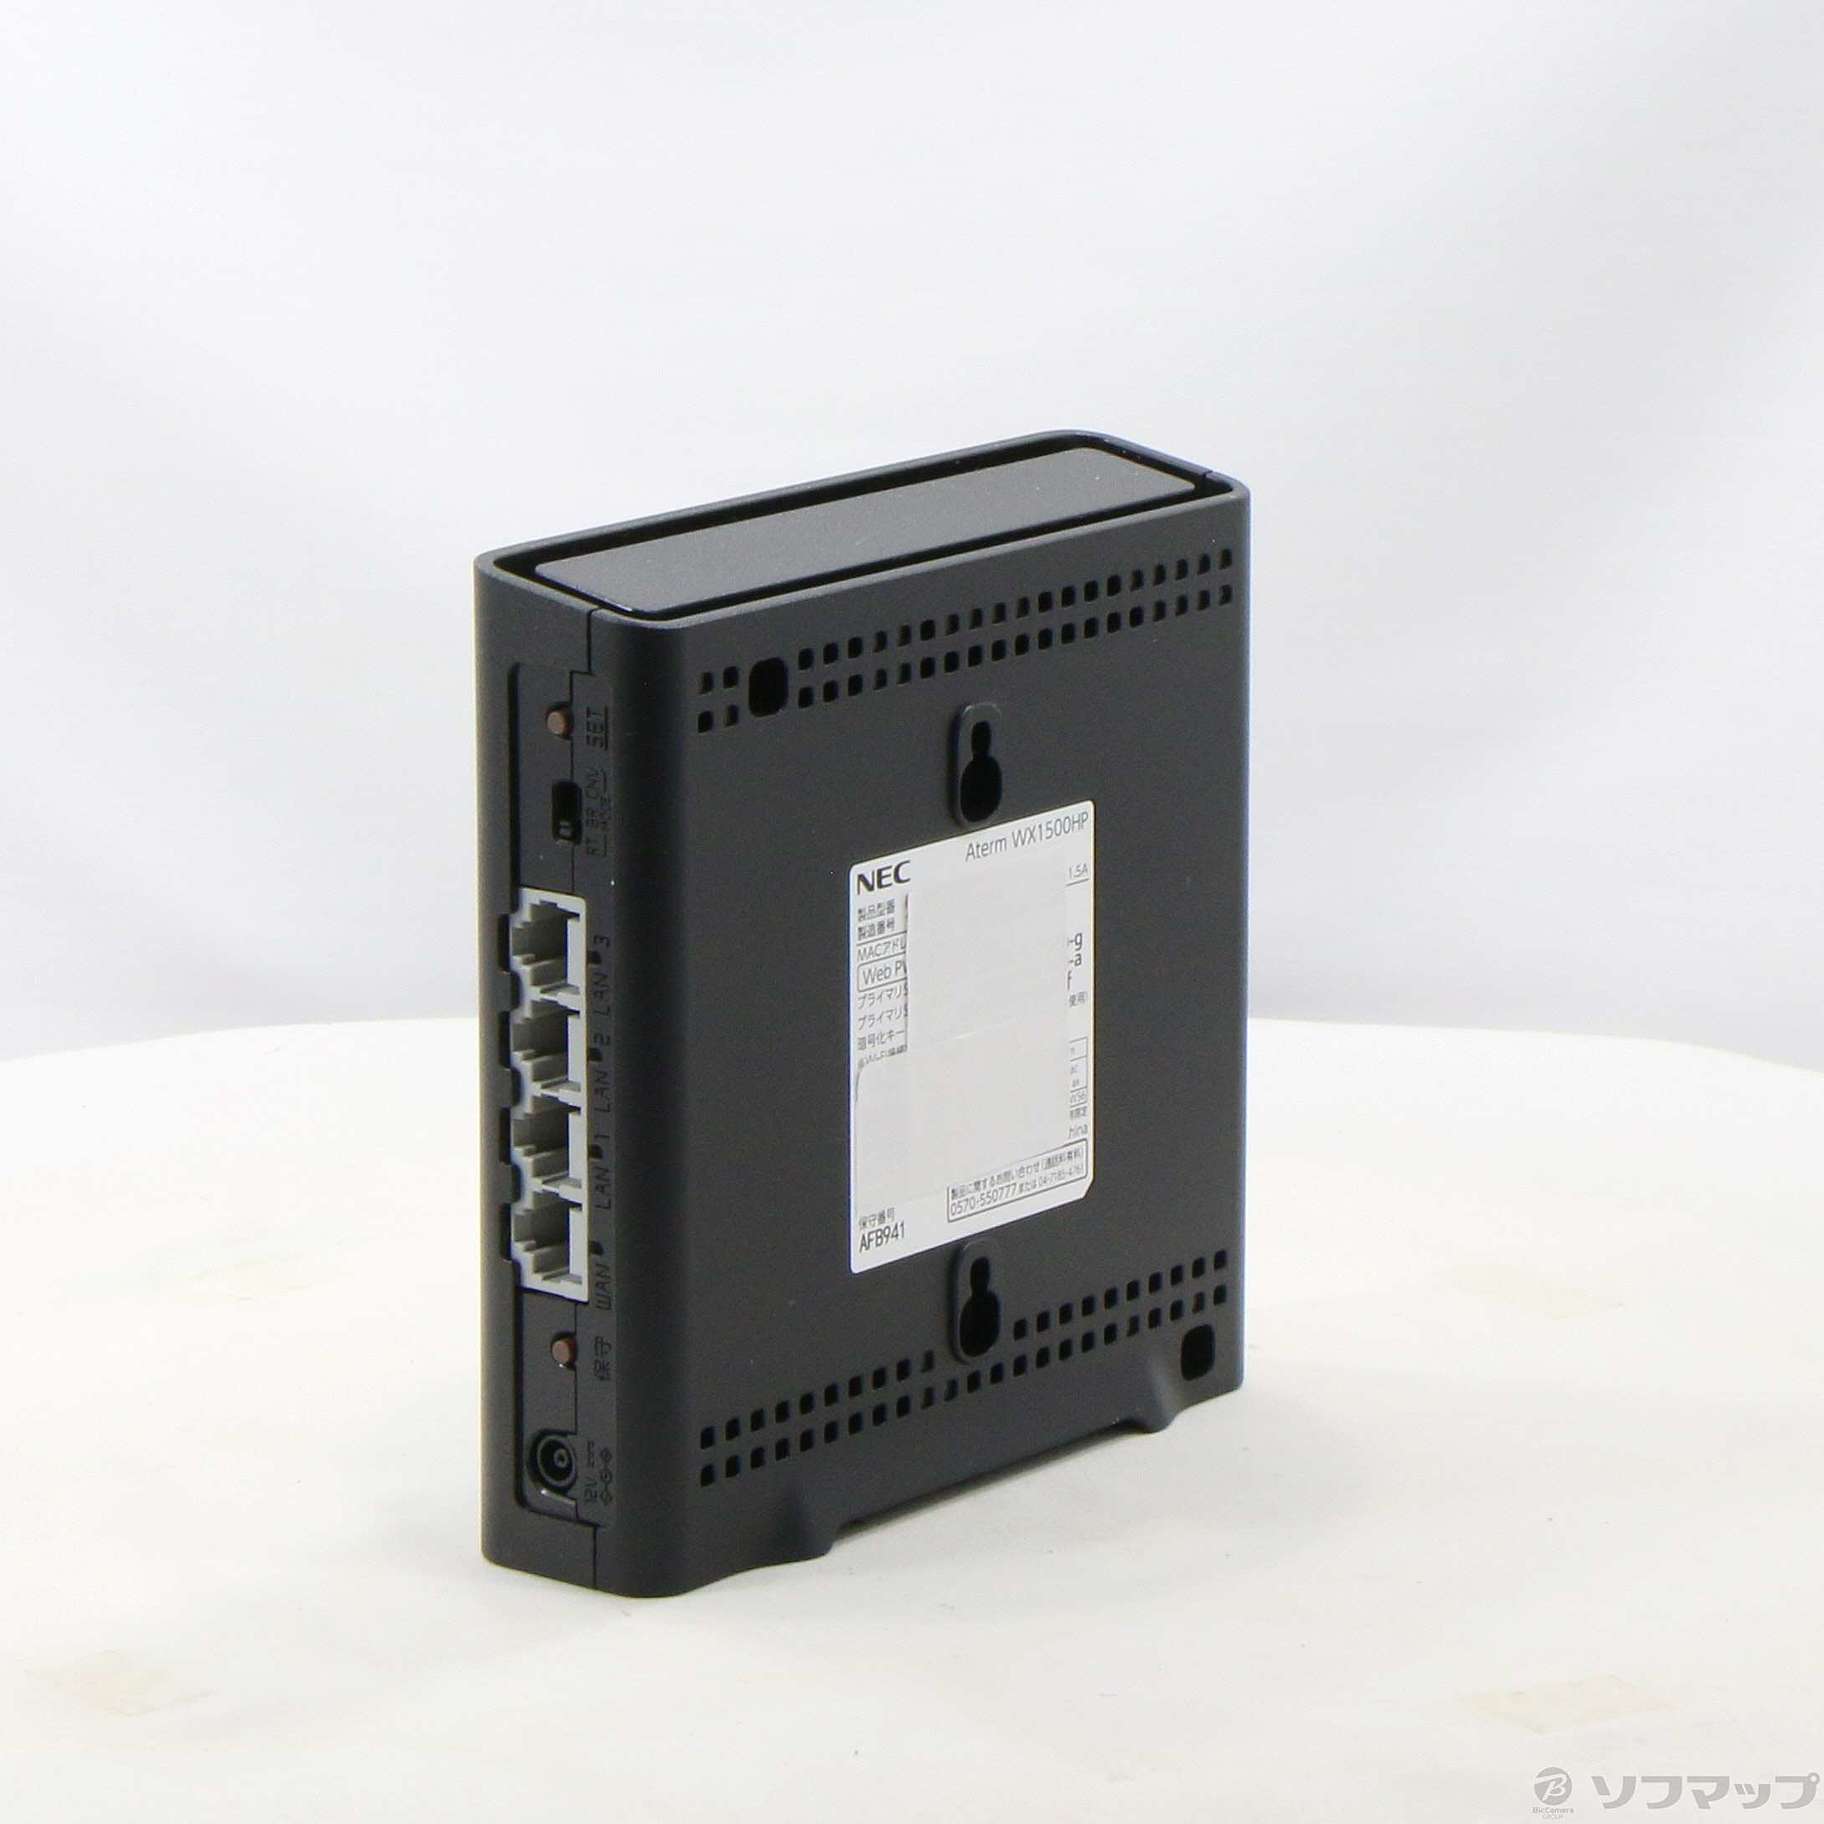 NEC PA-WX1500HP Wi-Fi ルーター　新品未使用